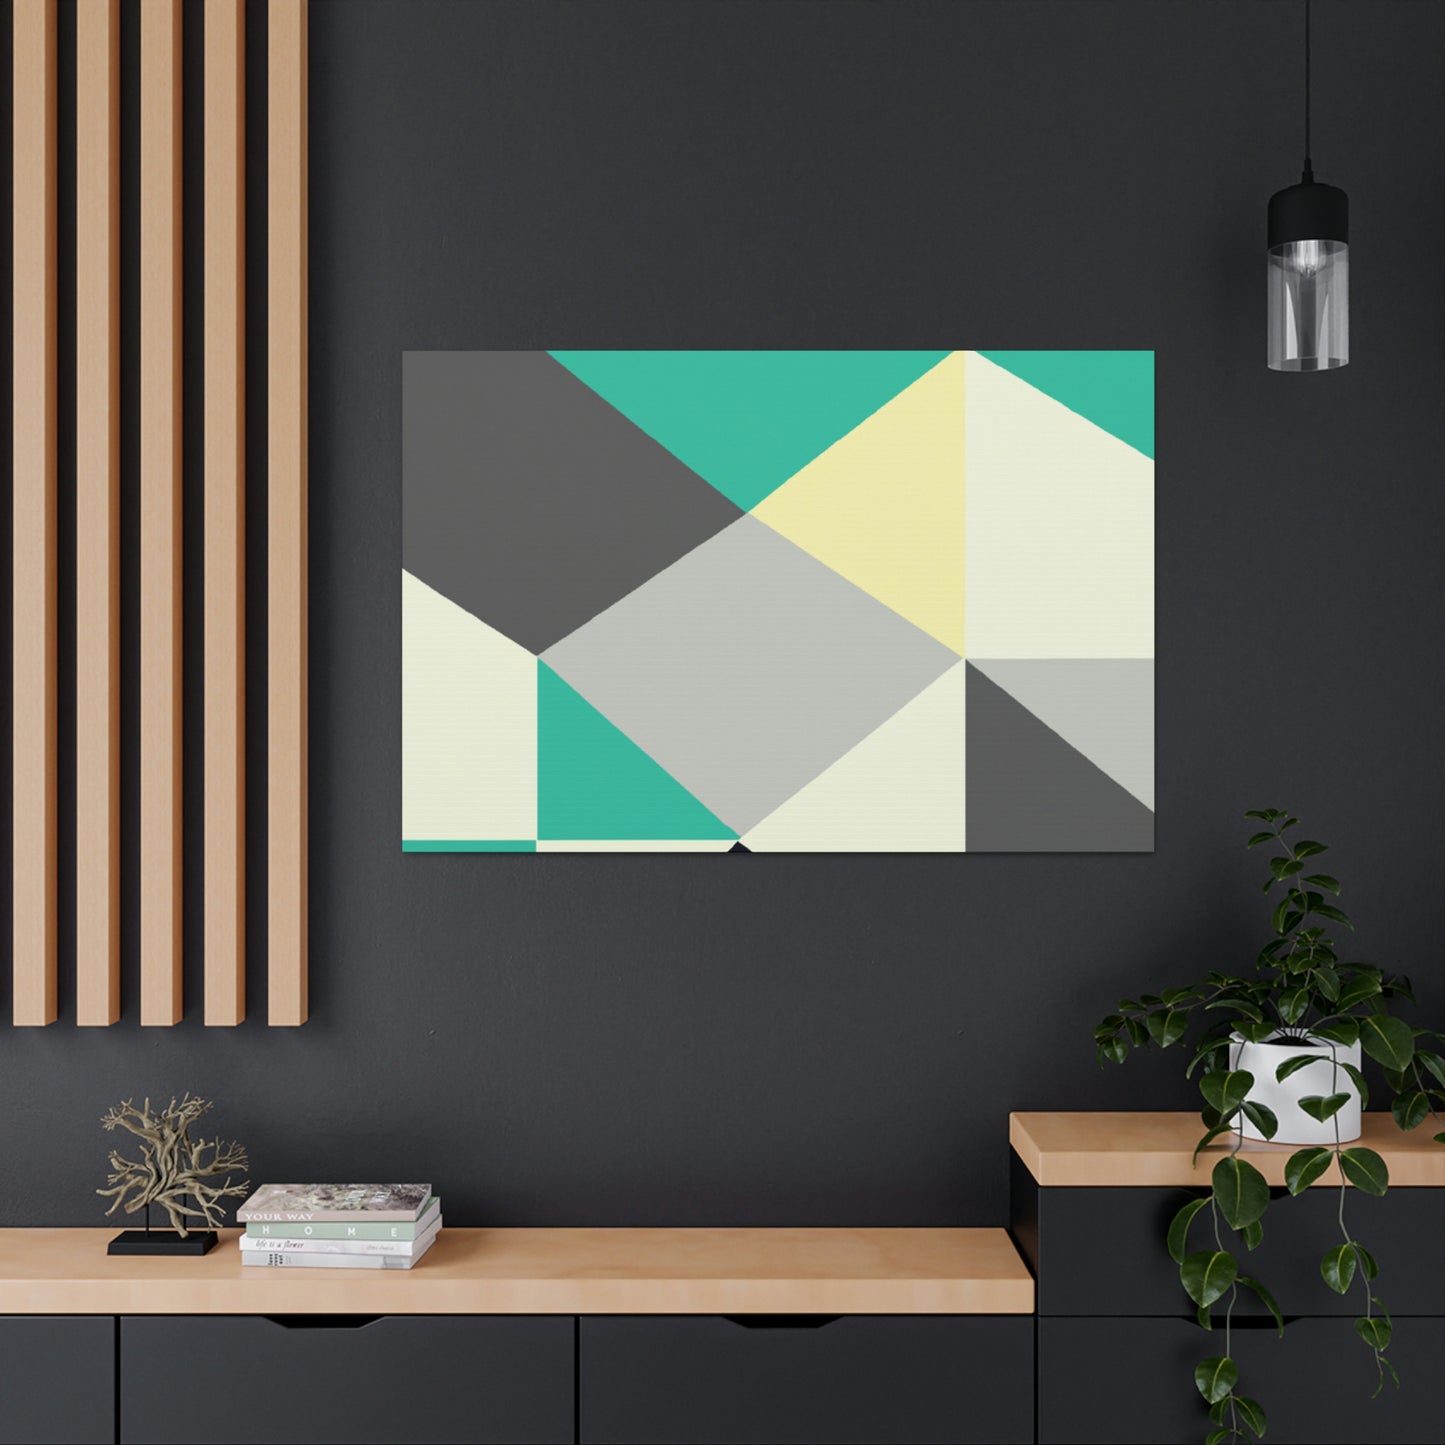 .

Aurora Smithson - Geometric Canvas Wall Art